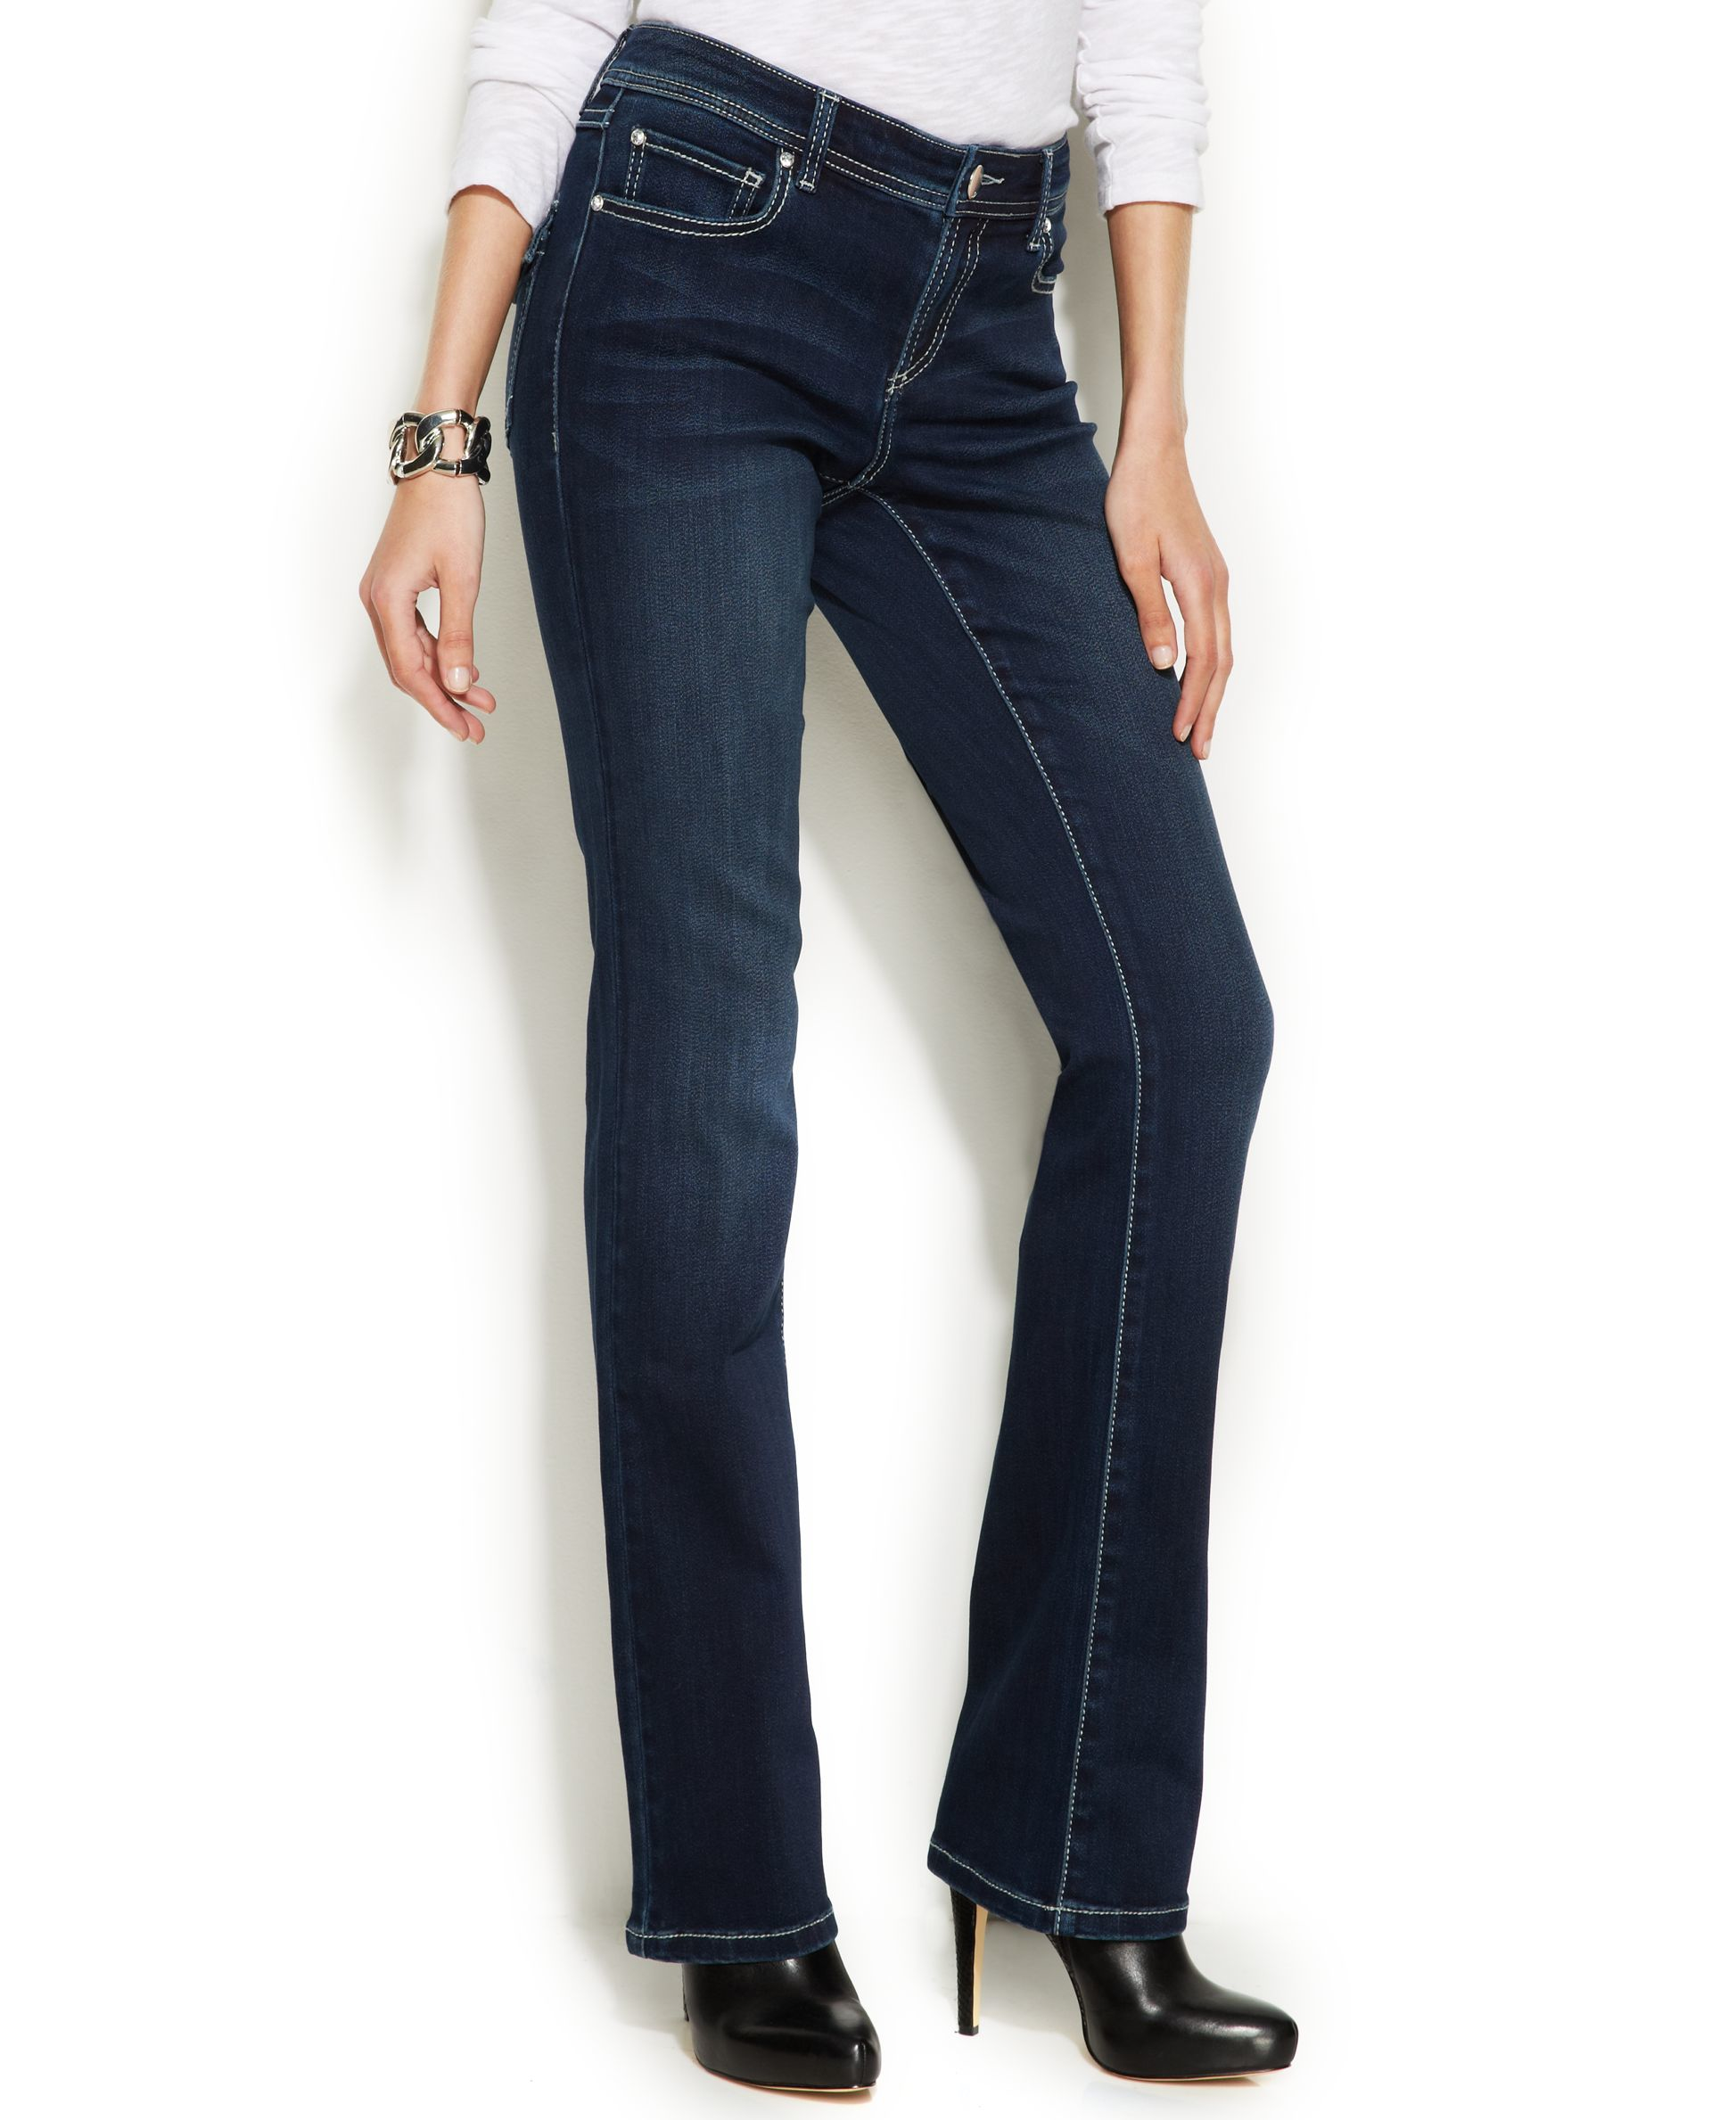 Lyst - Inc International Concepts Petite Curvy-fit Bootcut Jeans, Dark ...